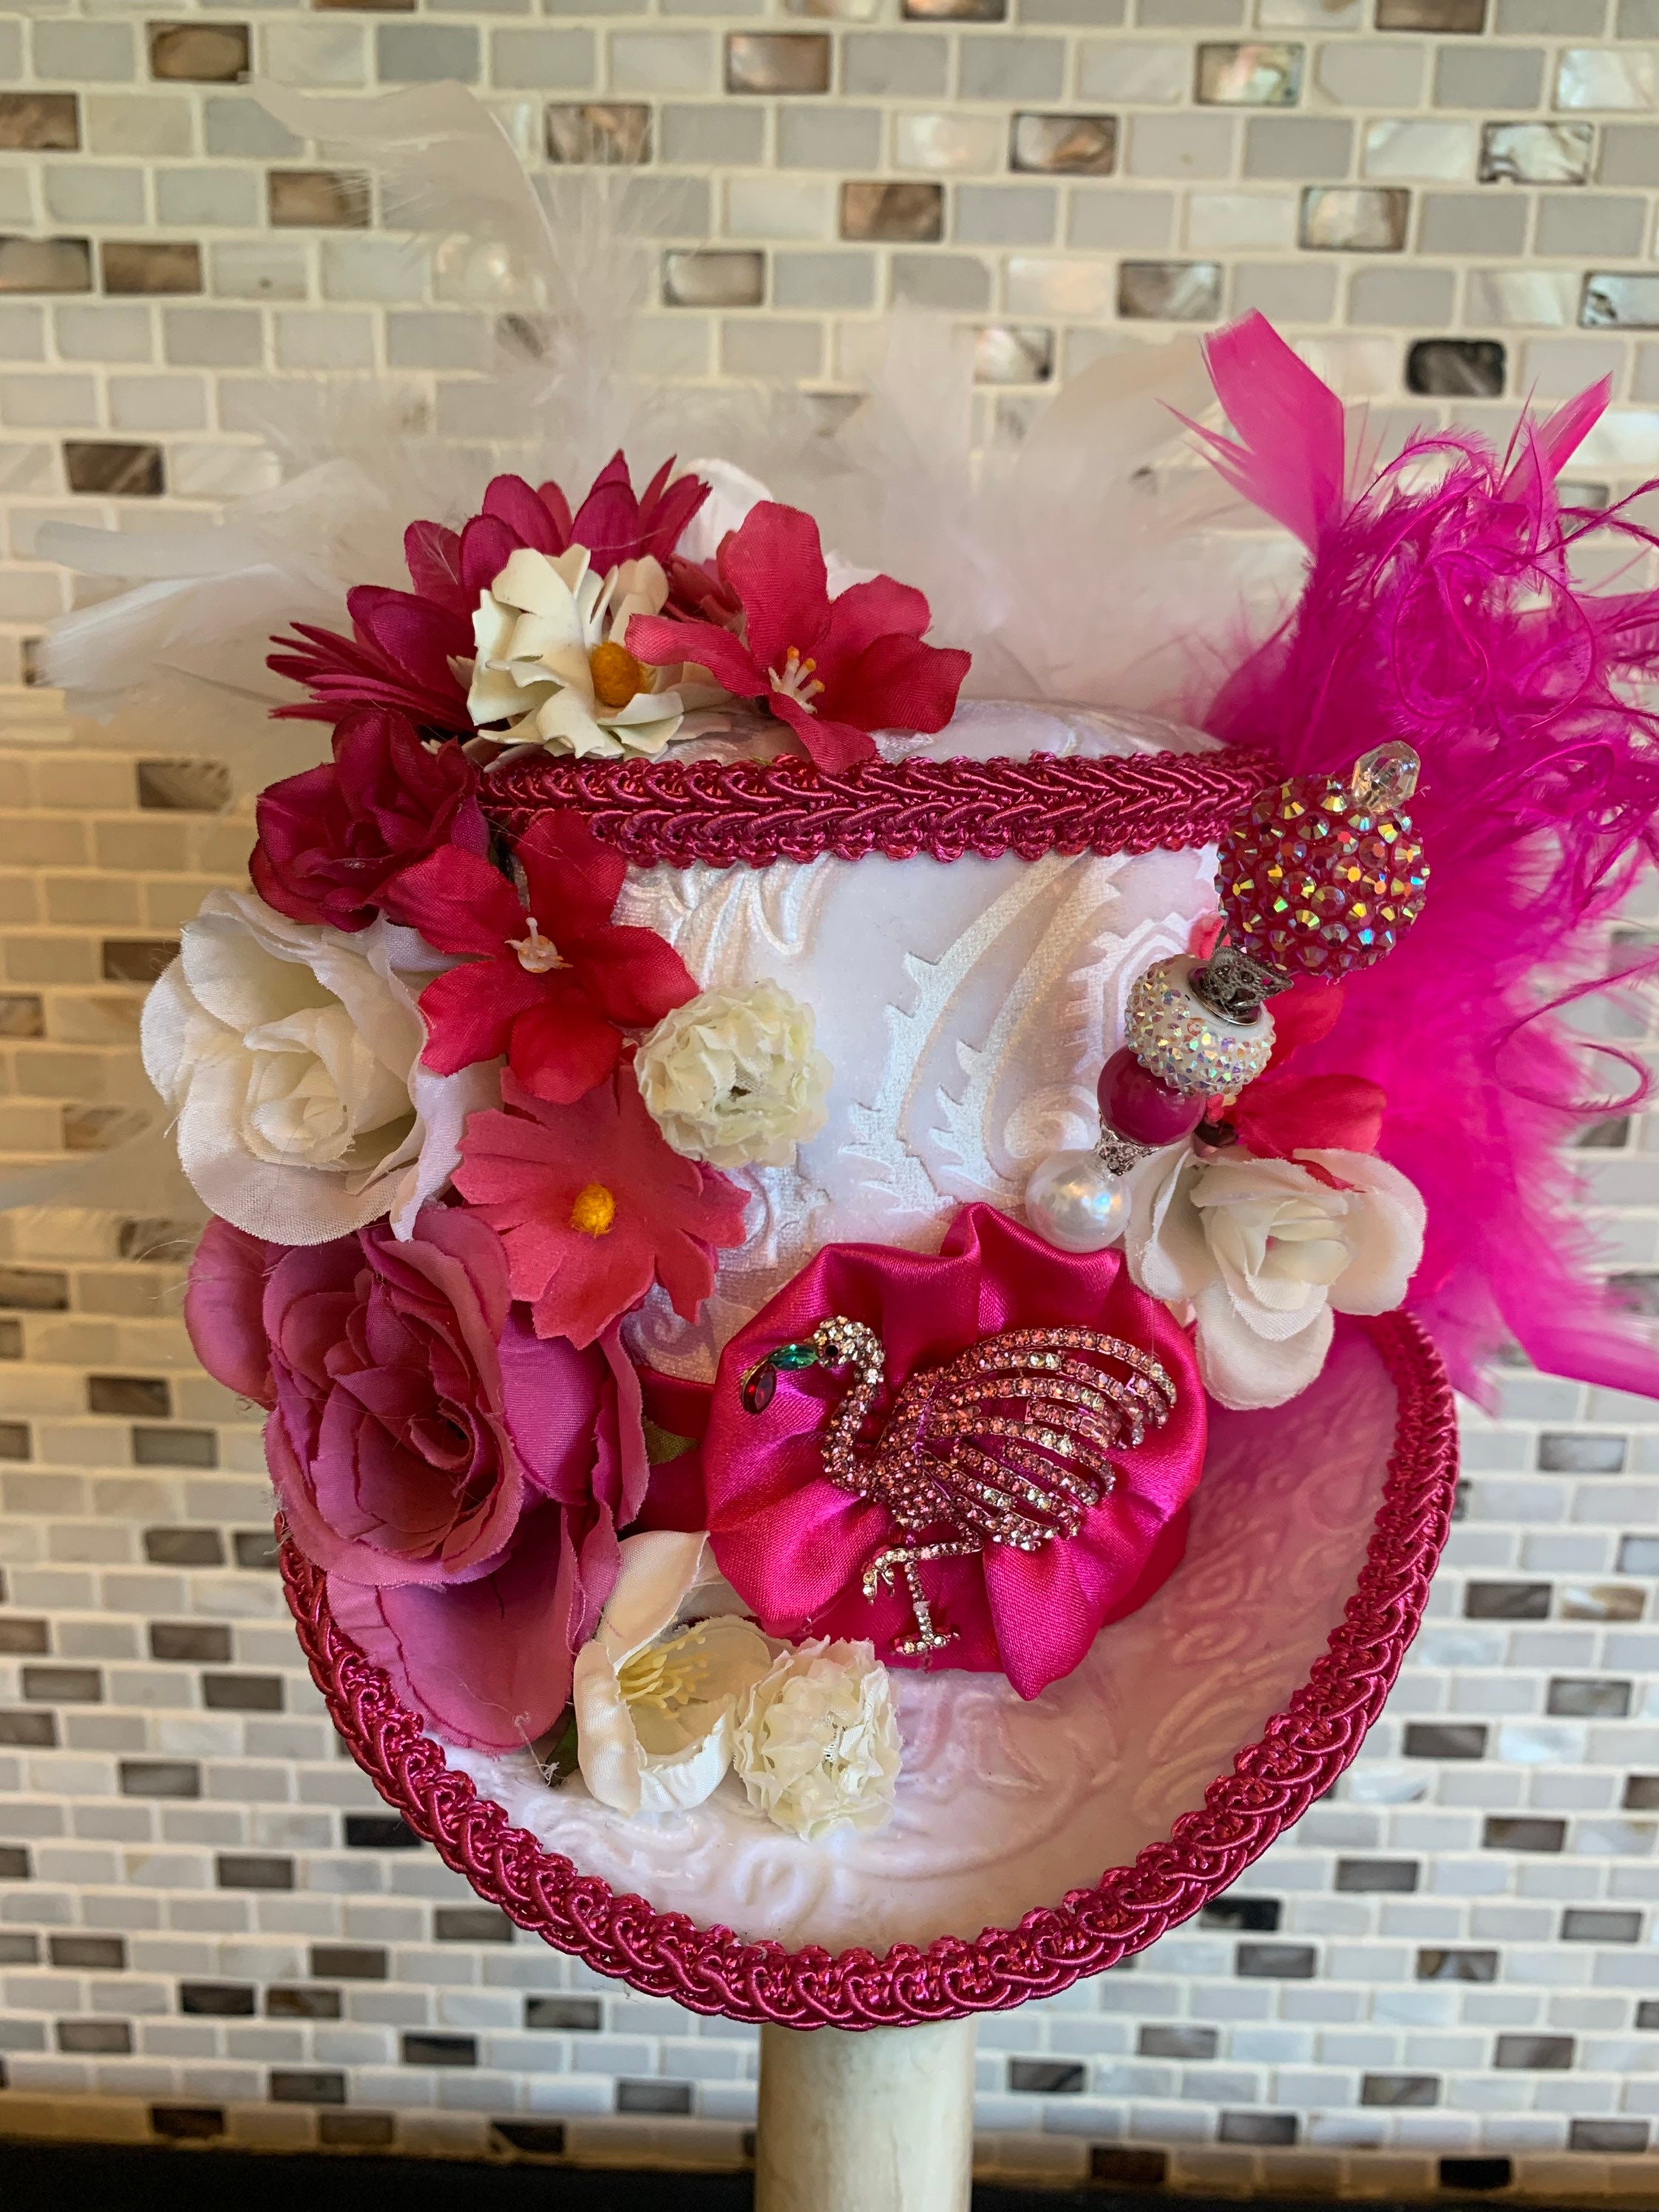 Gerard Straw Cloche Derby Hat with Pink Bow - Genevieve Rose Atelier